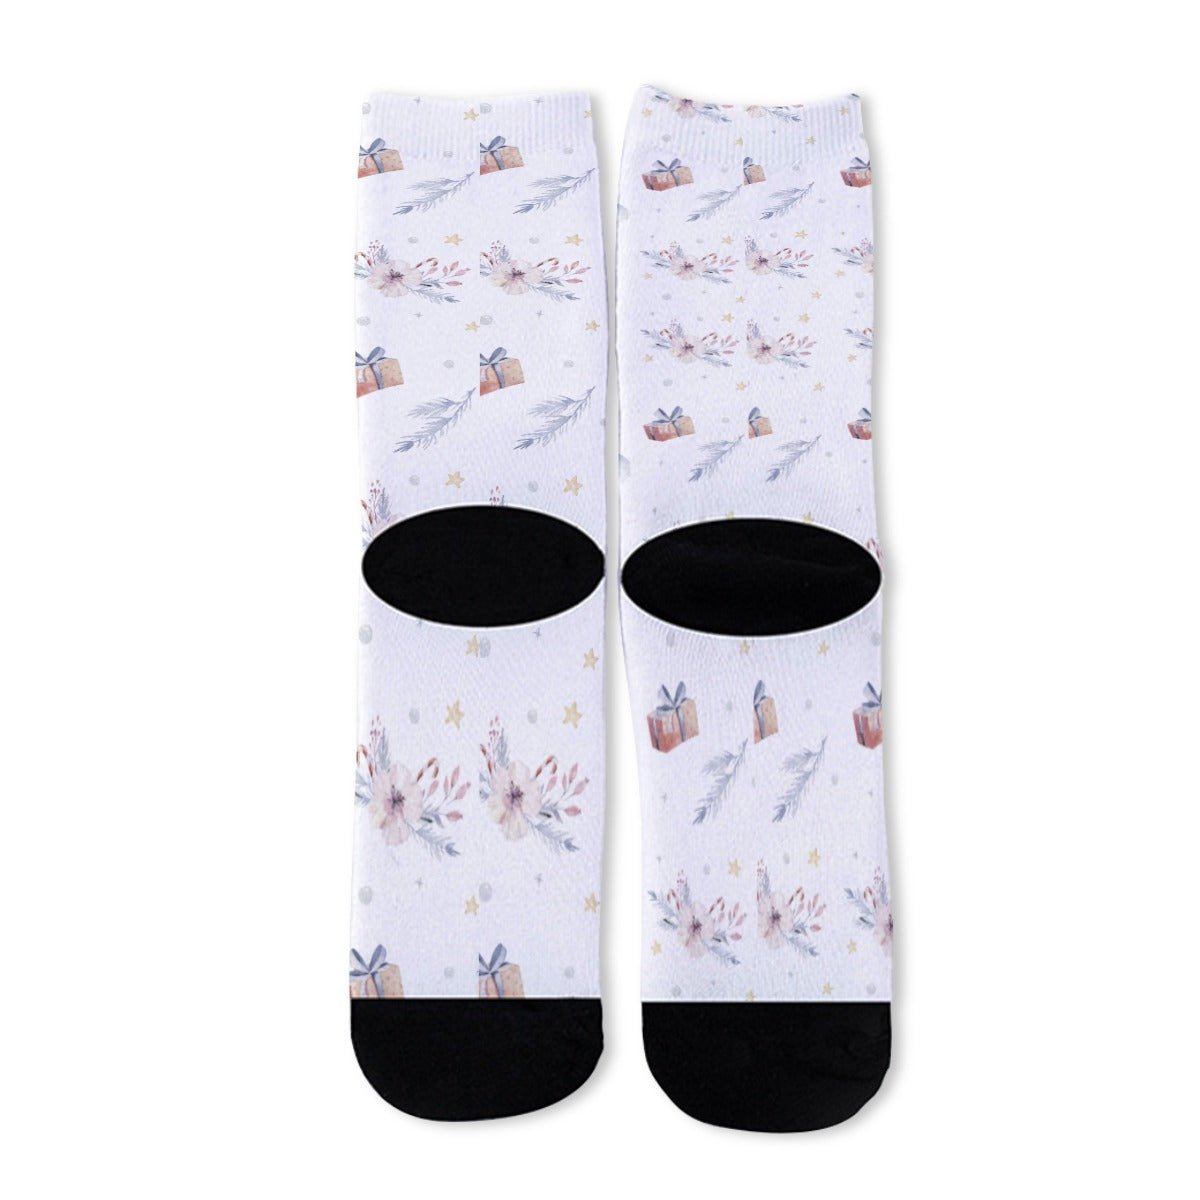 Unisex Long Socks - Watercolour Penguins - Festive Style